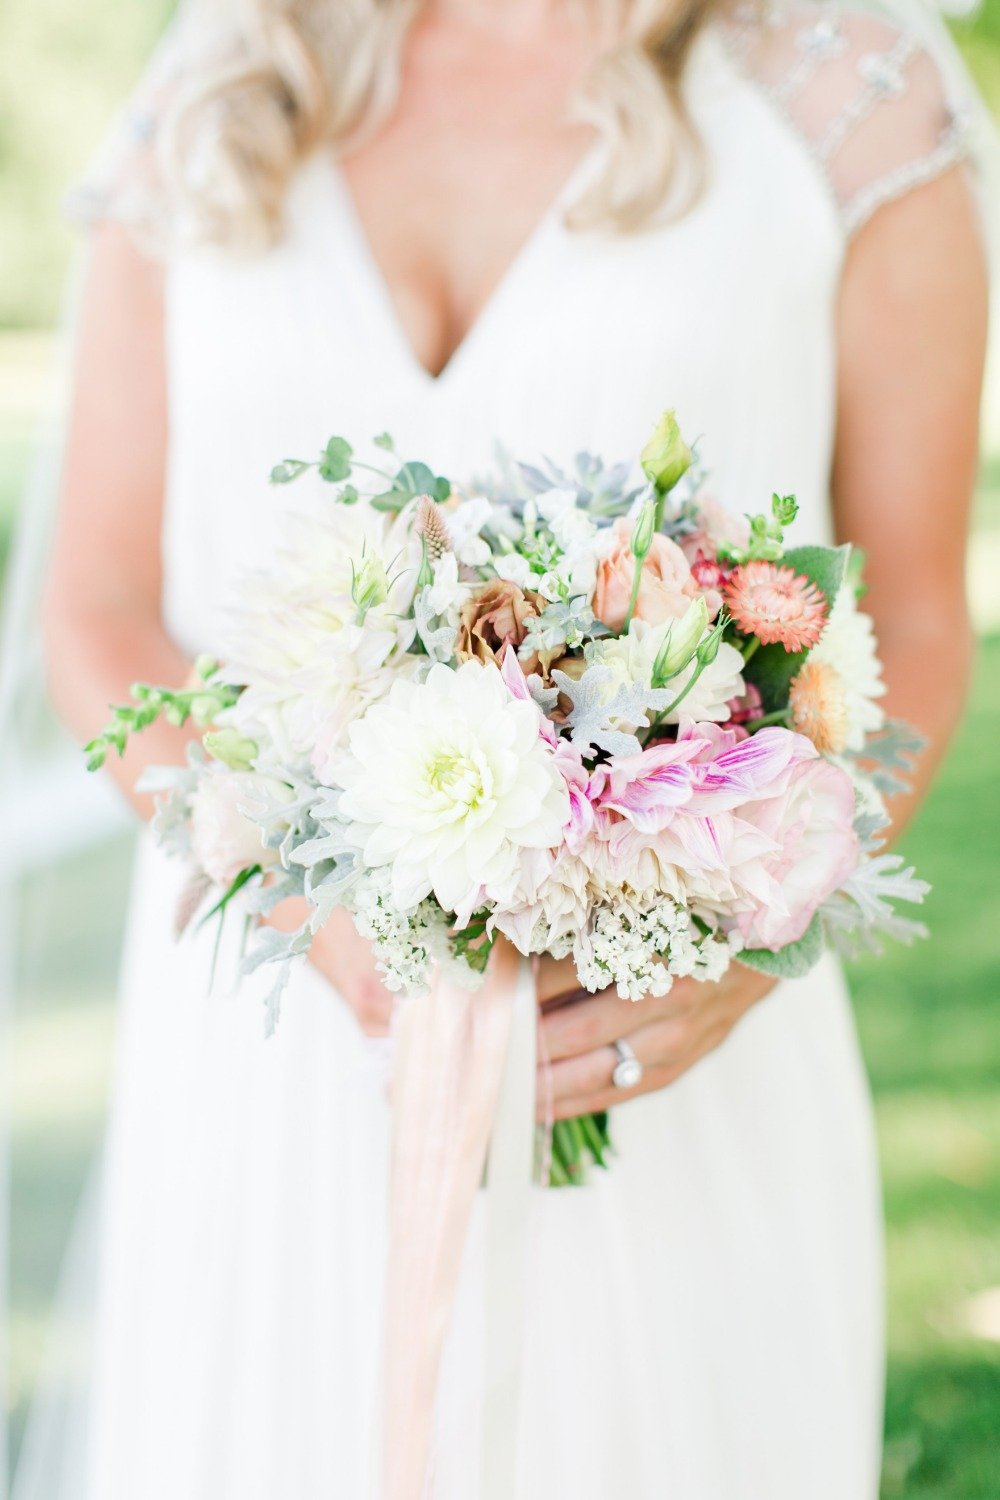 Pretty wedding bouquet